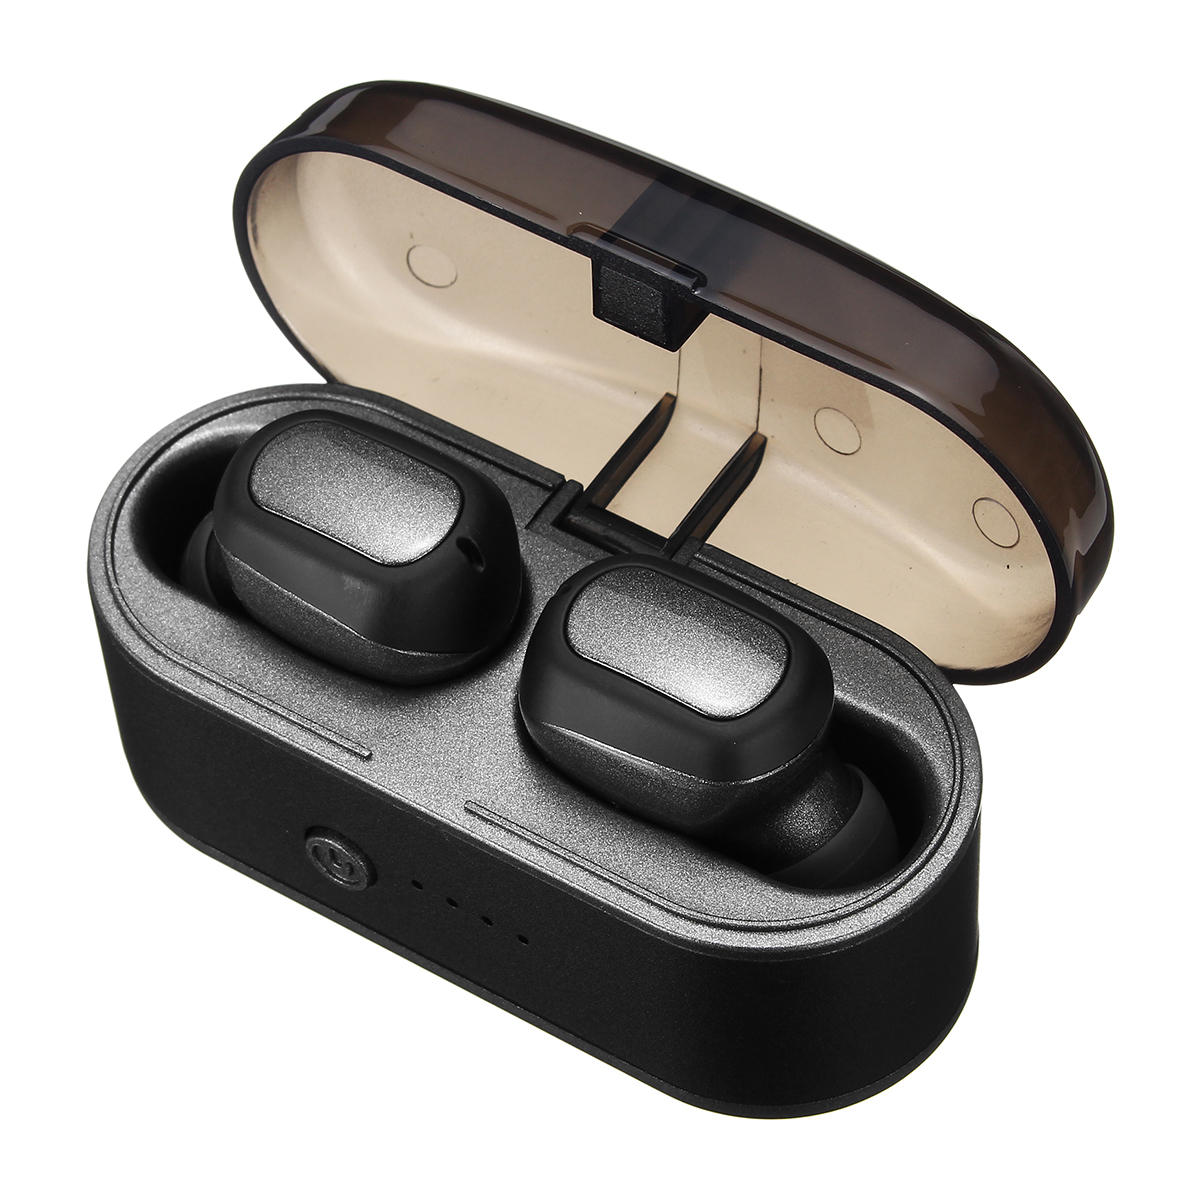 Image of [bluetooth 50] TWS Mini Wireless Earbuds Earphone CVC 80 Noise Cancelling Bass Stereo IPX5 Waterproof Headphones